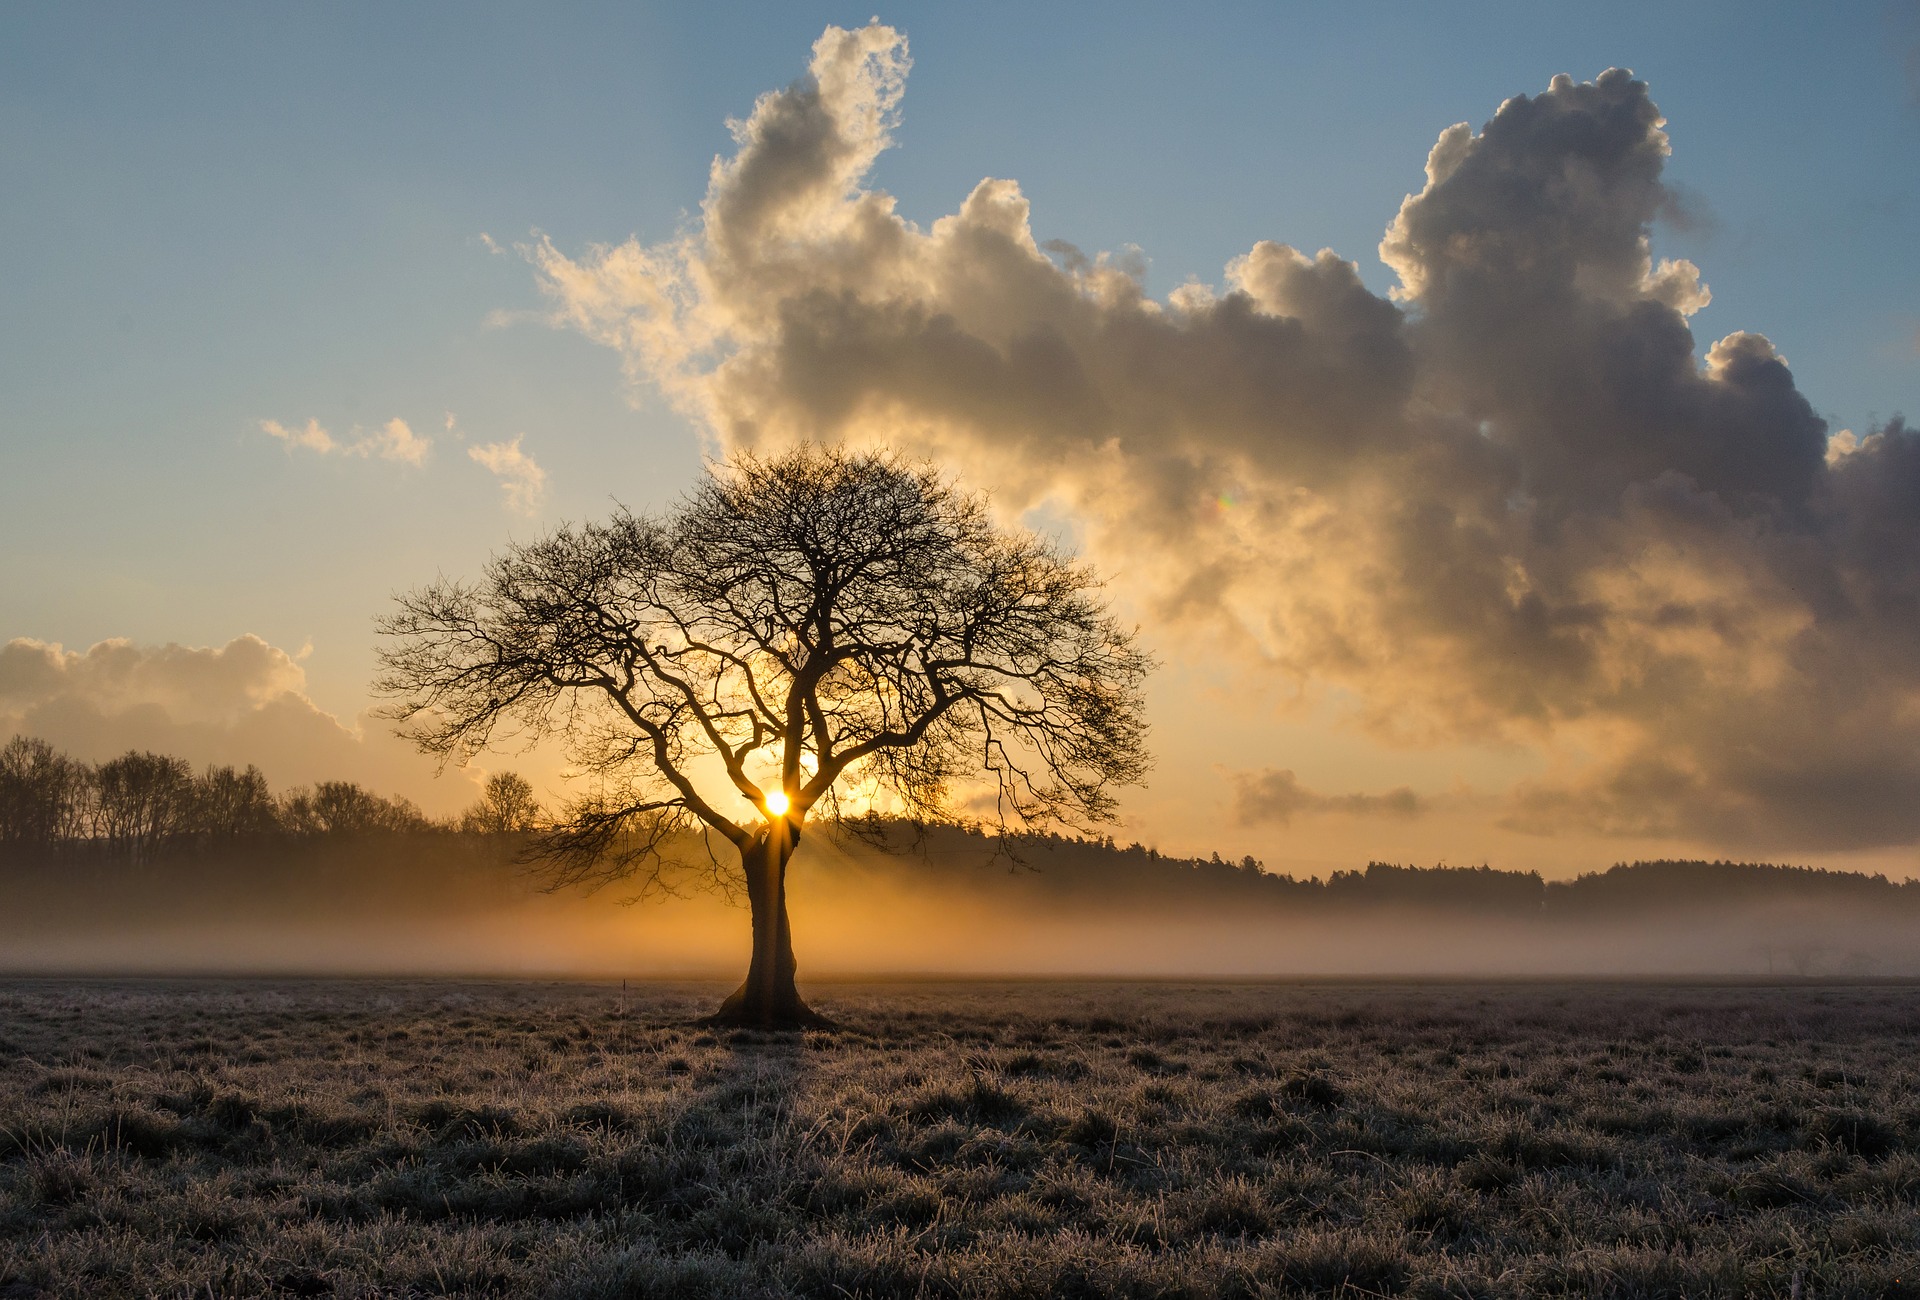 A Lone Oak tree in the sunrise on a fog covered field